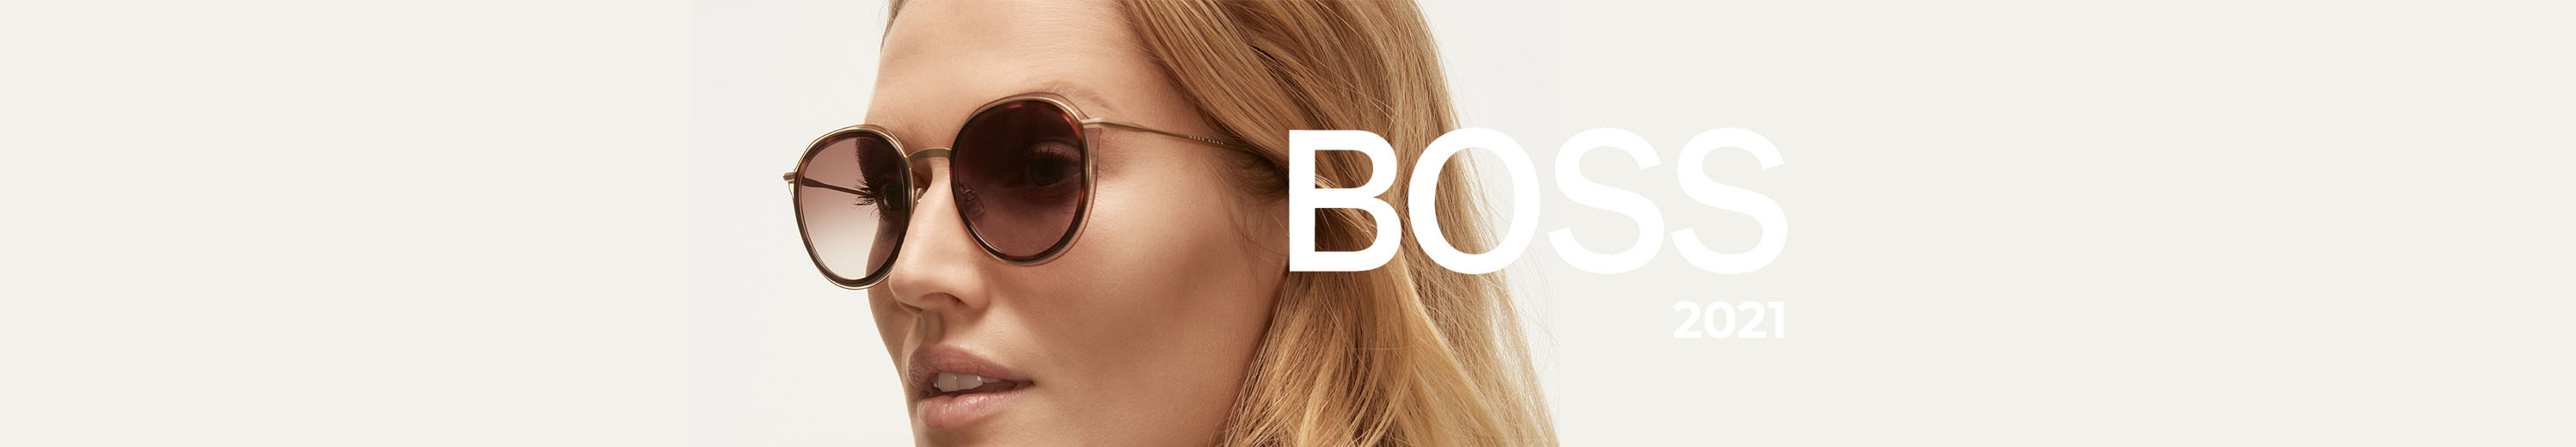 BOSS 2021 Spring / Summer Eyewear Collection